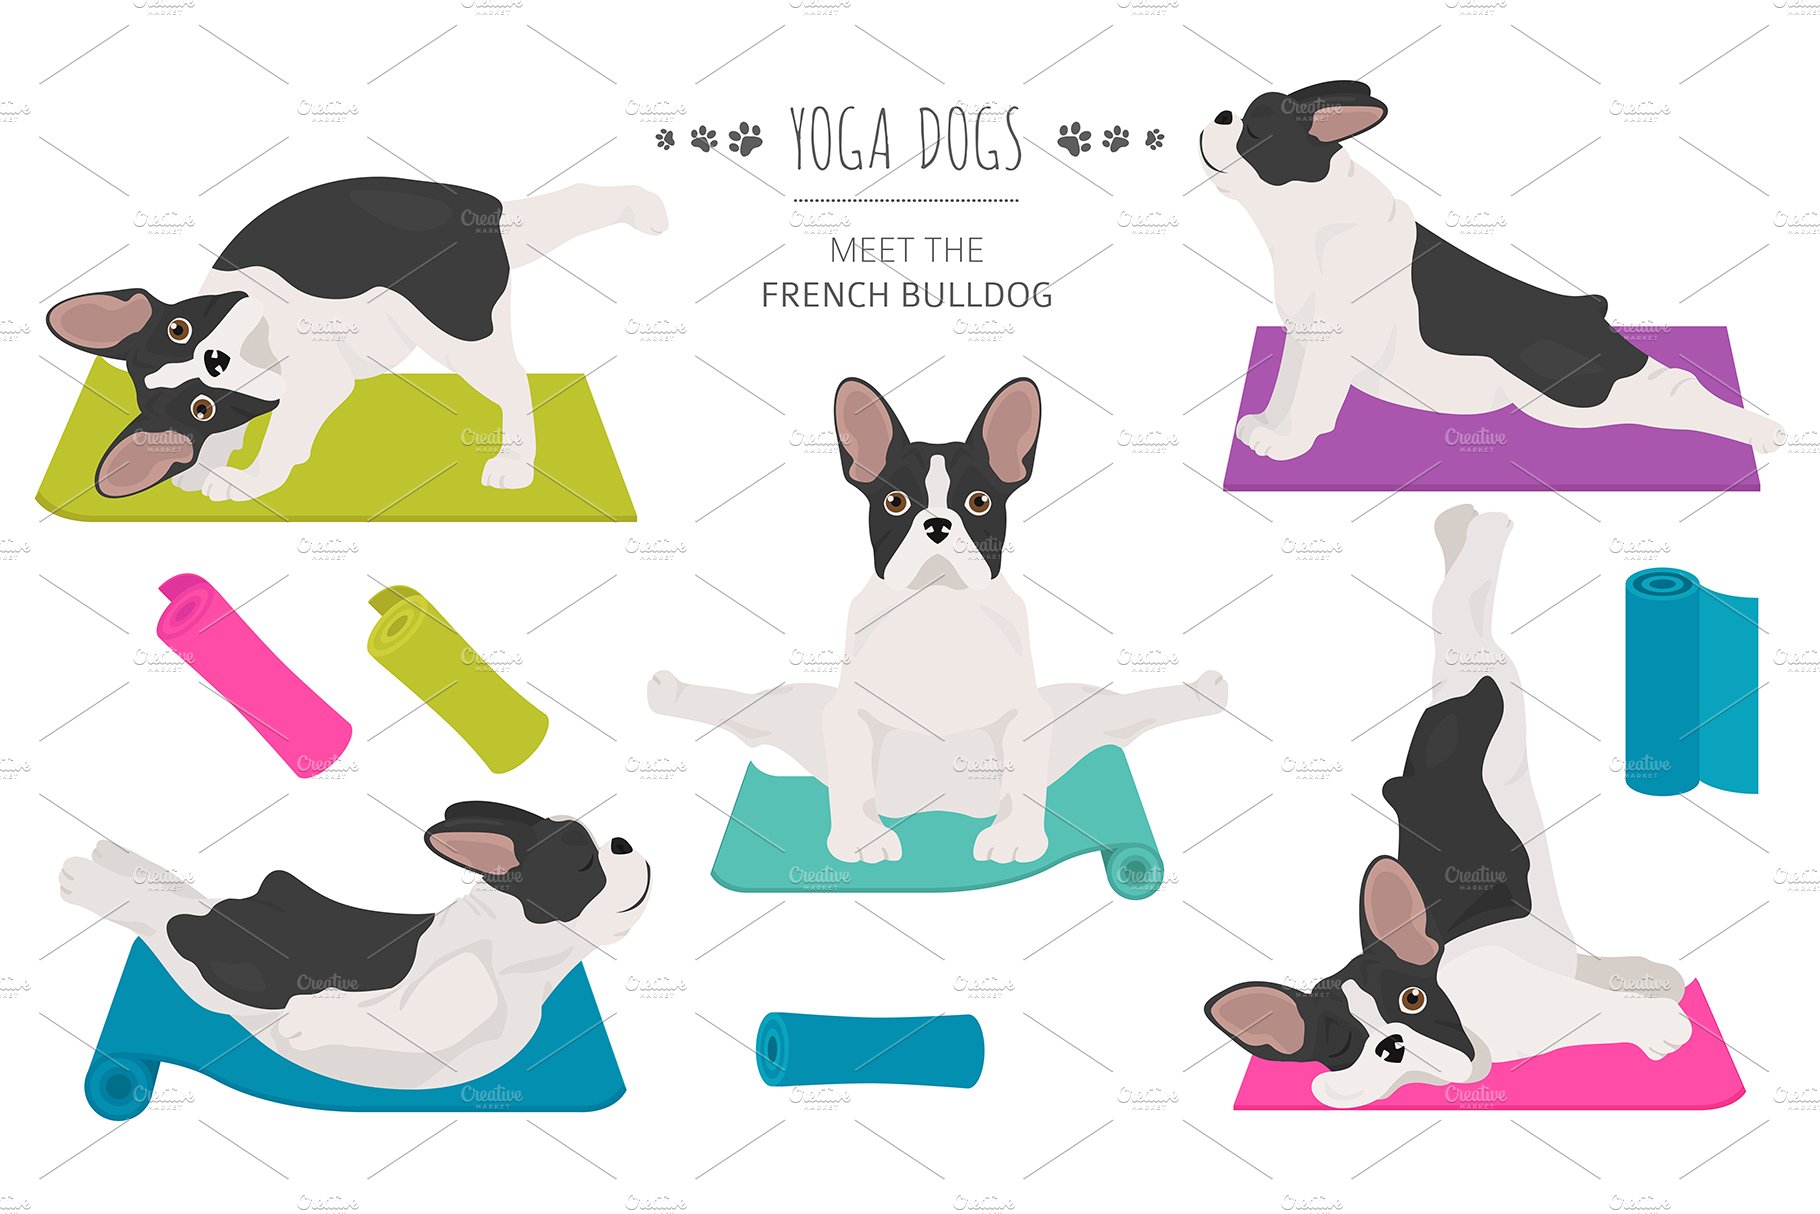 French bulldog yoga cover image.